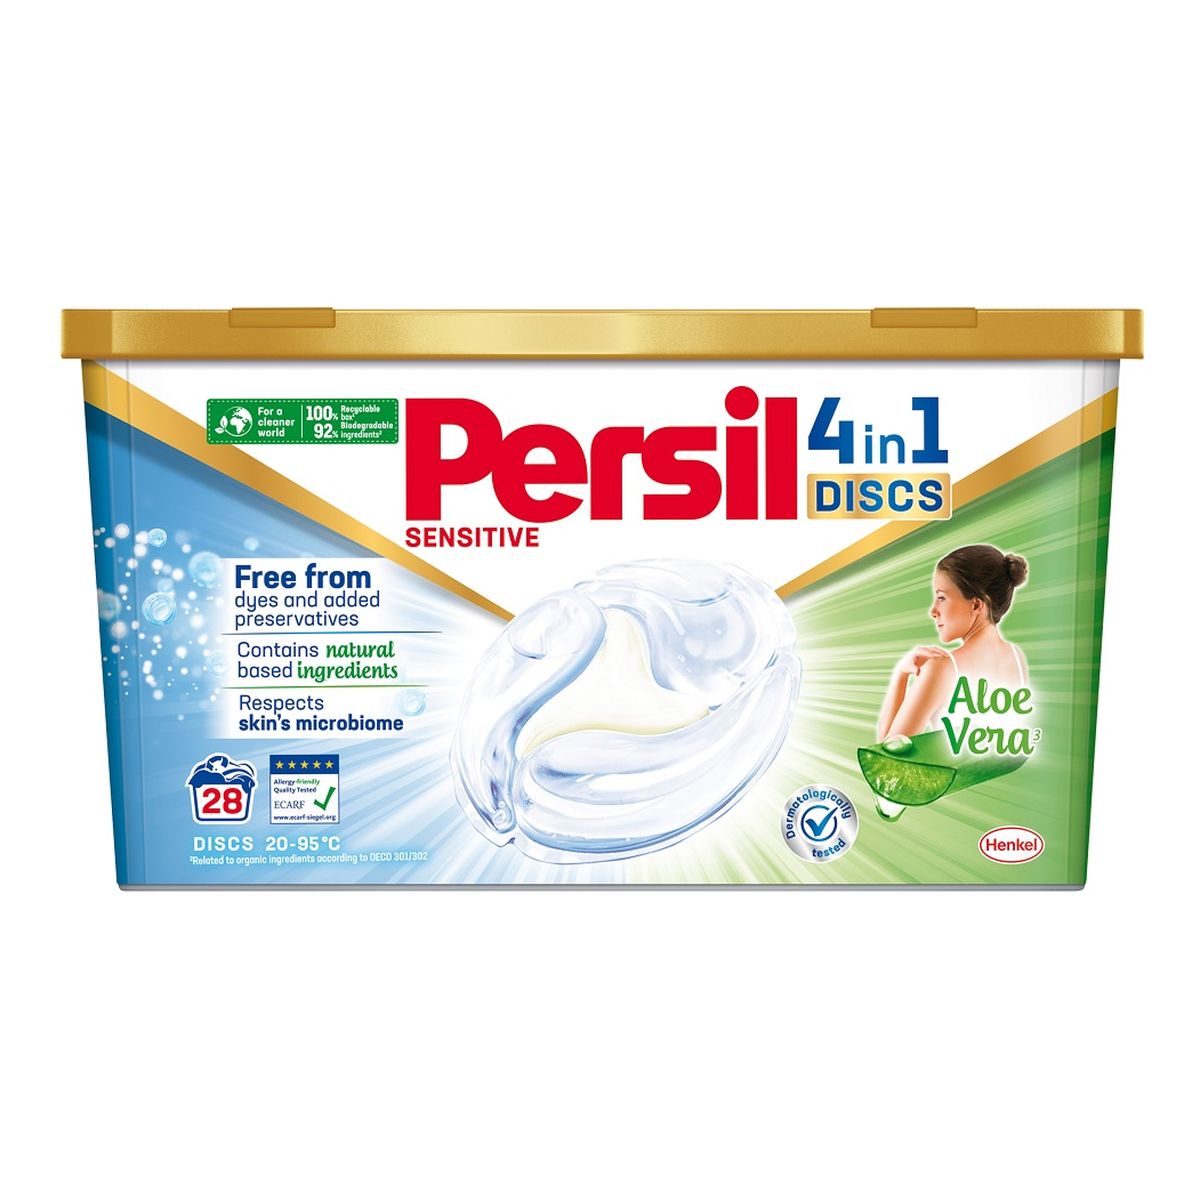 Persil Discs 4in1 sensitive kapsułki do prania 28szt.